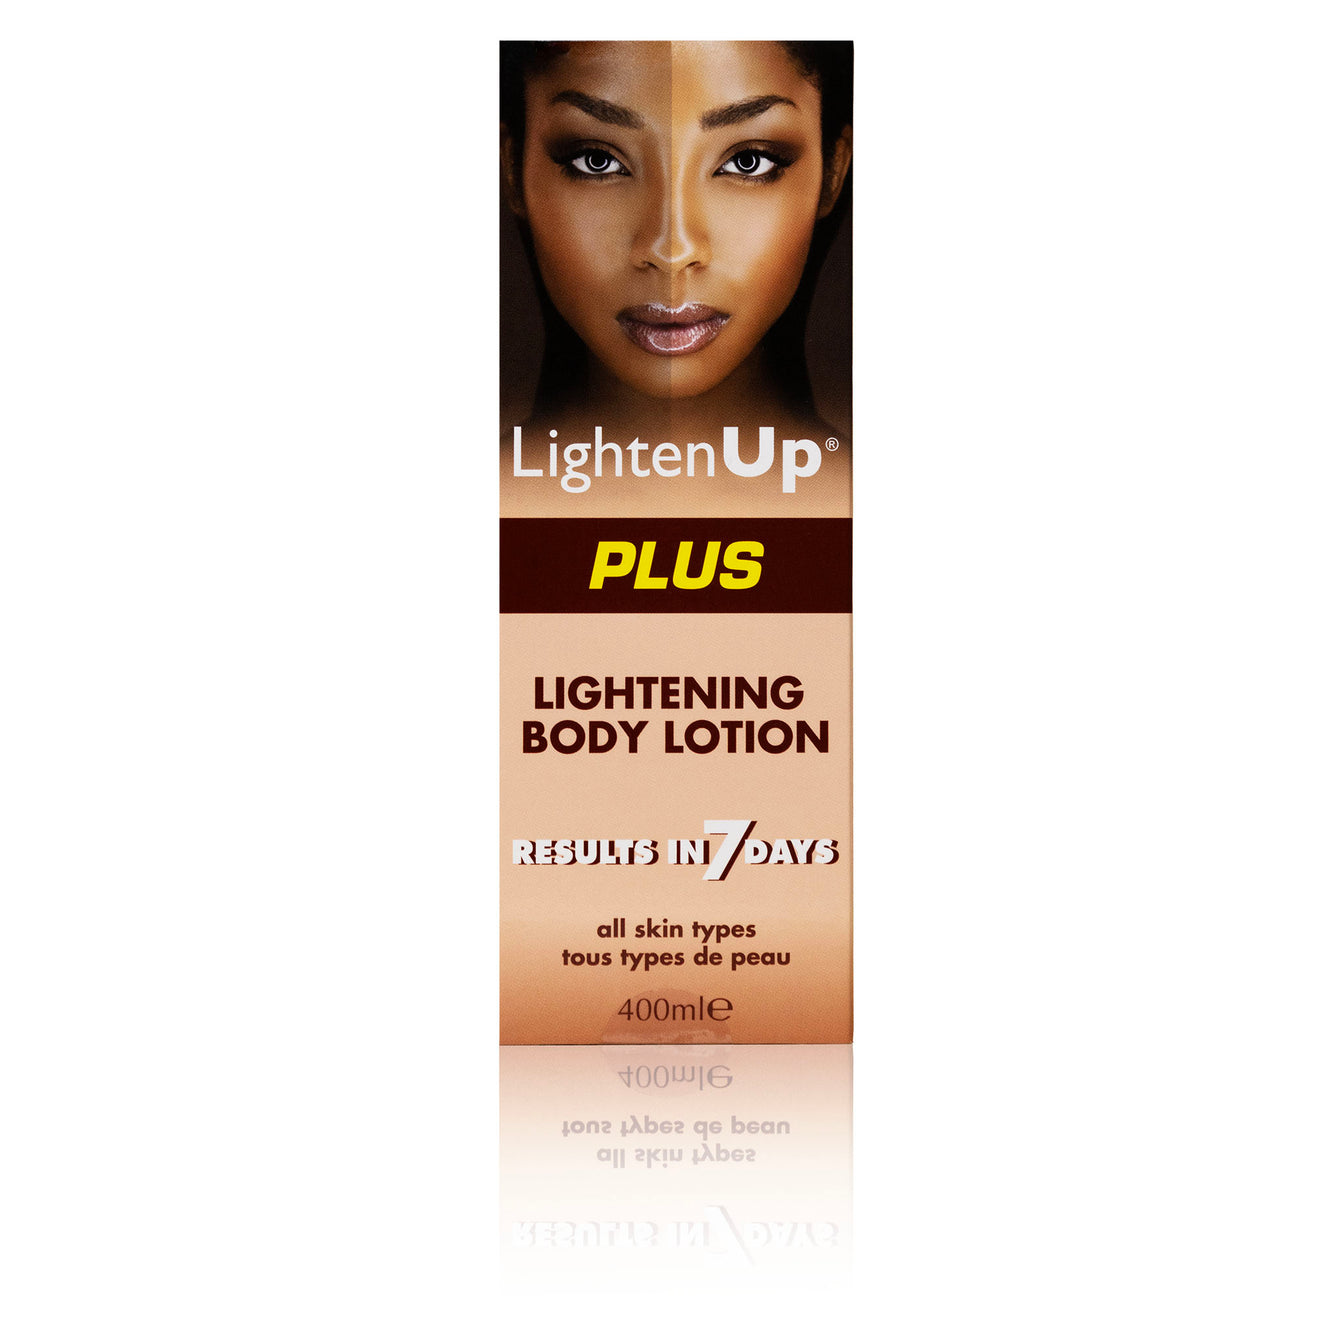 Lighten Up PLUS Lightening Body Pump Lotion 7 Day Results 400ml